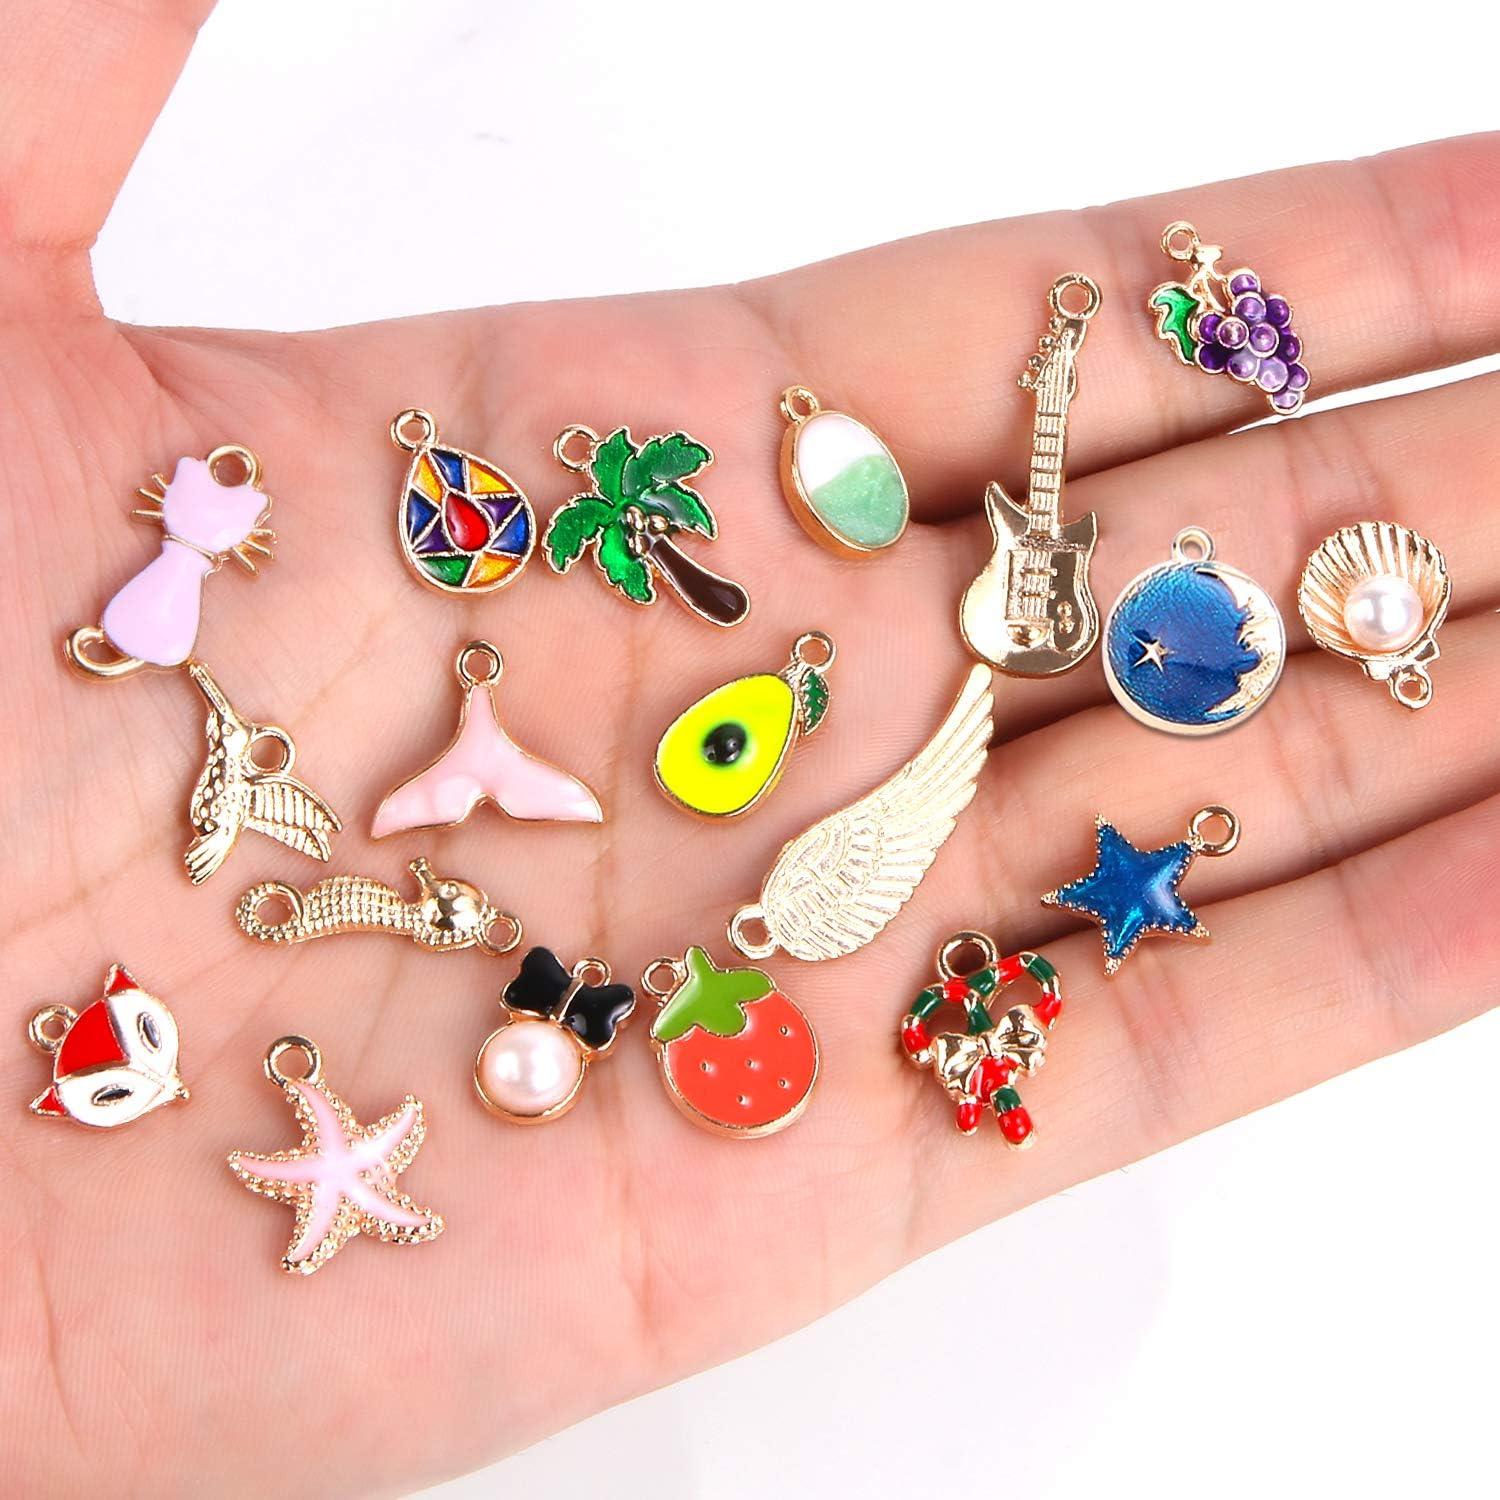 EXCEART 40 pcs jewelry kits bejeweled kit jewlery kit DIY pendant charms  jewelry making pendants alloy pendant charm microscope set Accessories